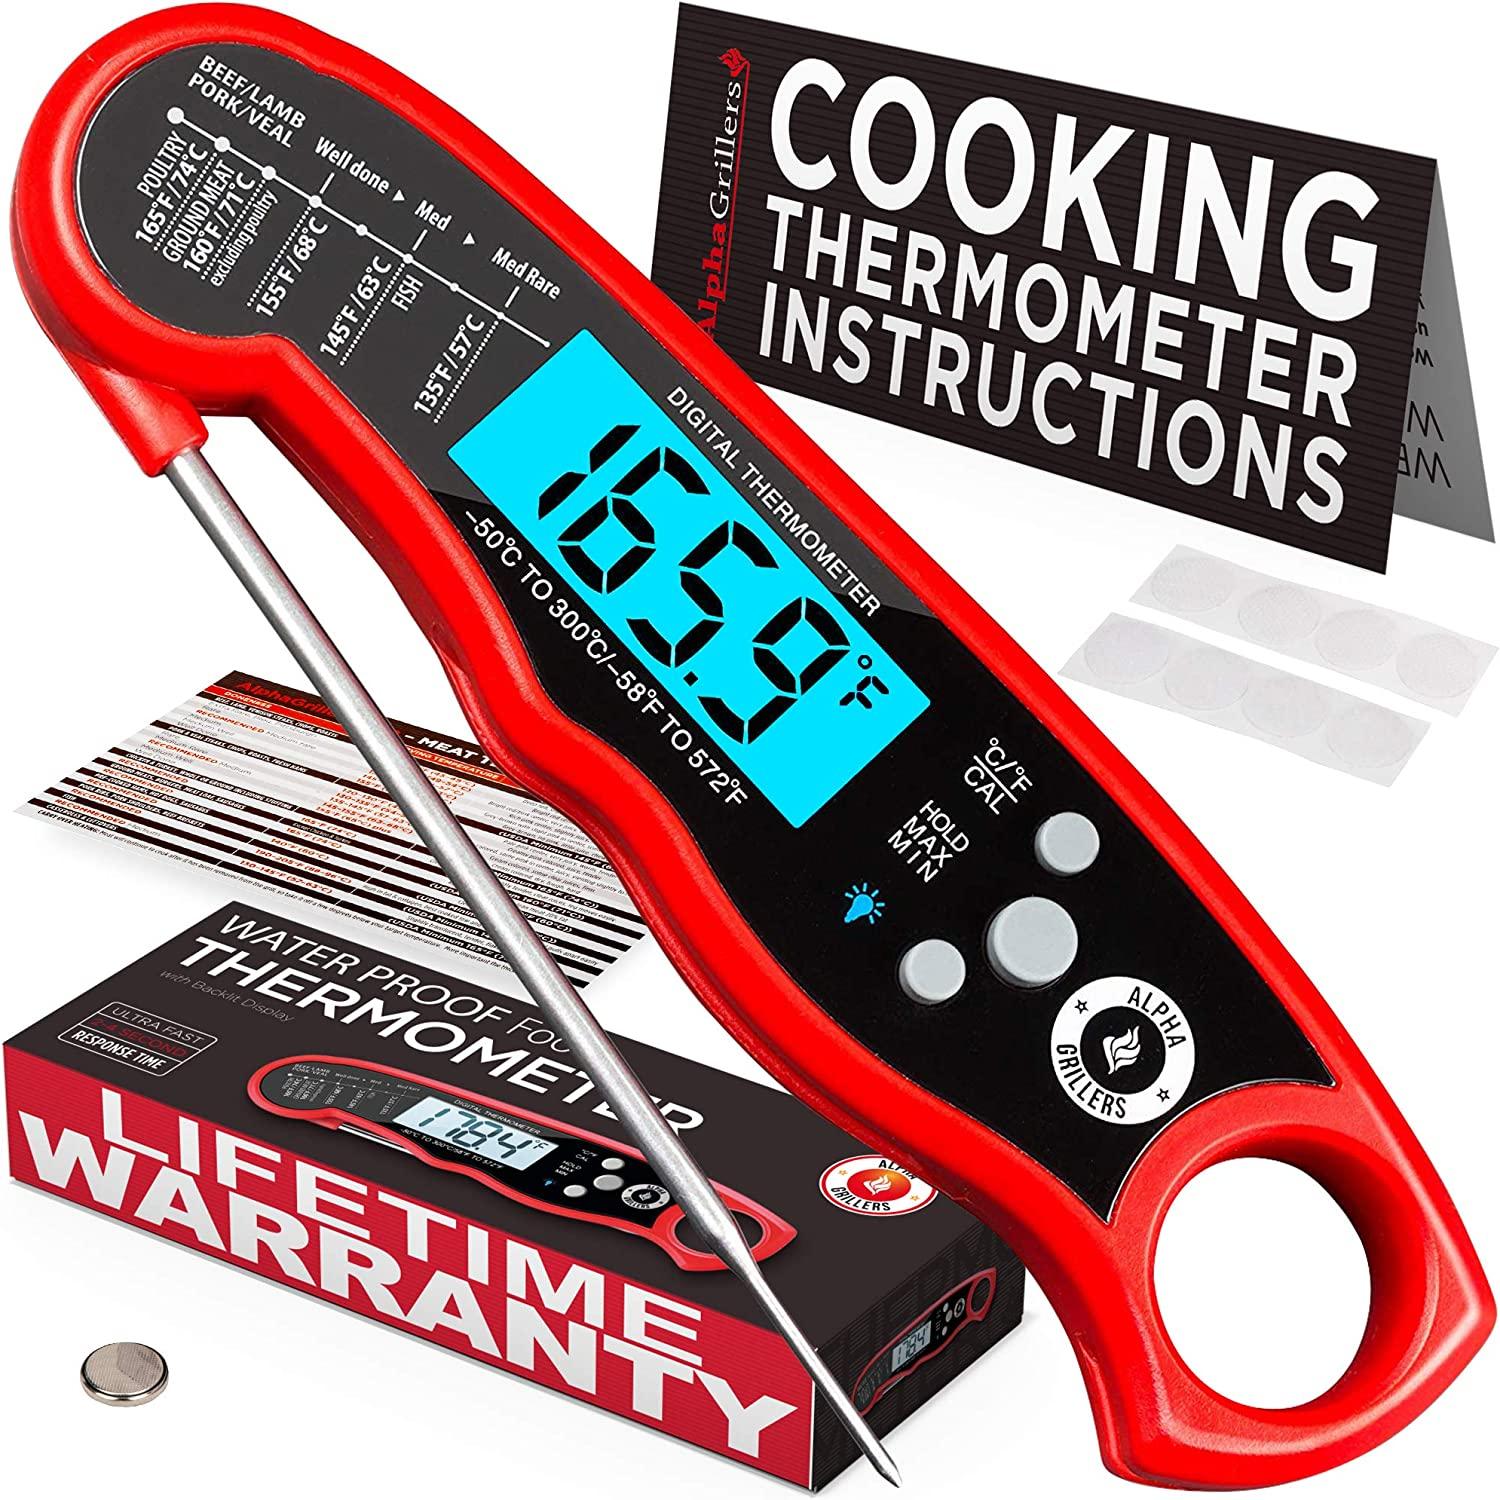 KIZEN Digital Meat Thermometer with Probe Waterproof, Kitchen